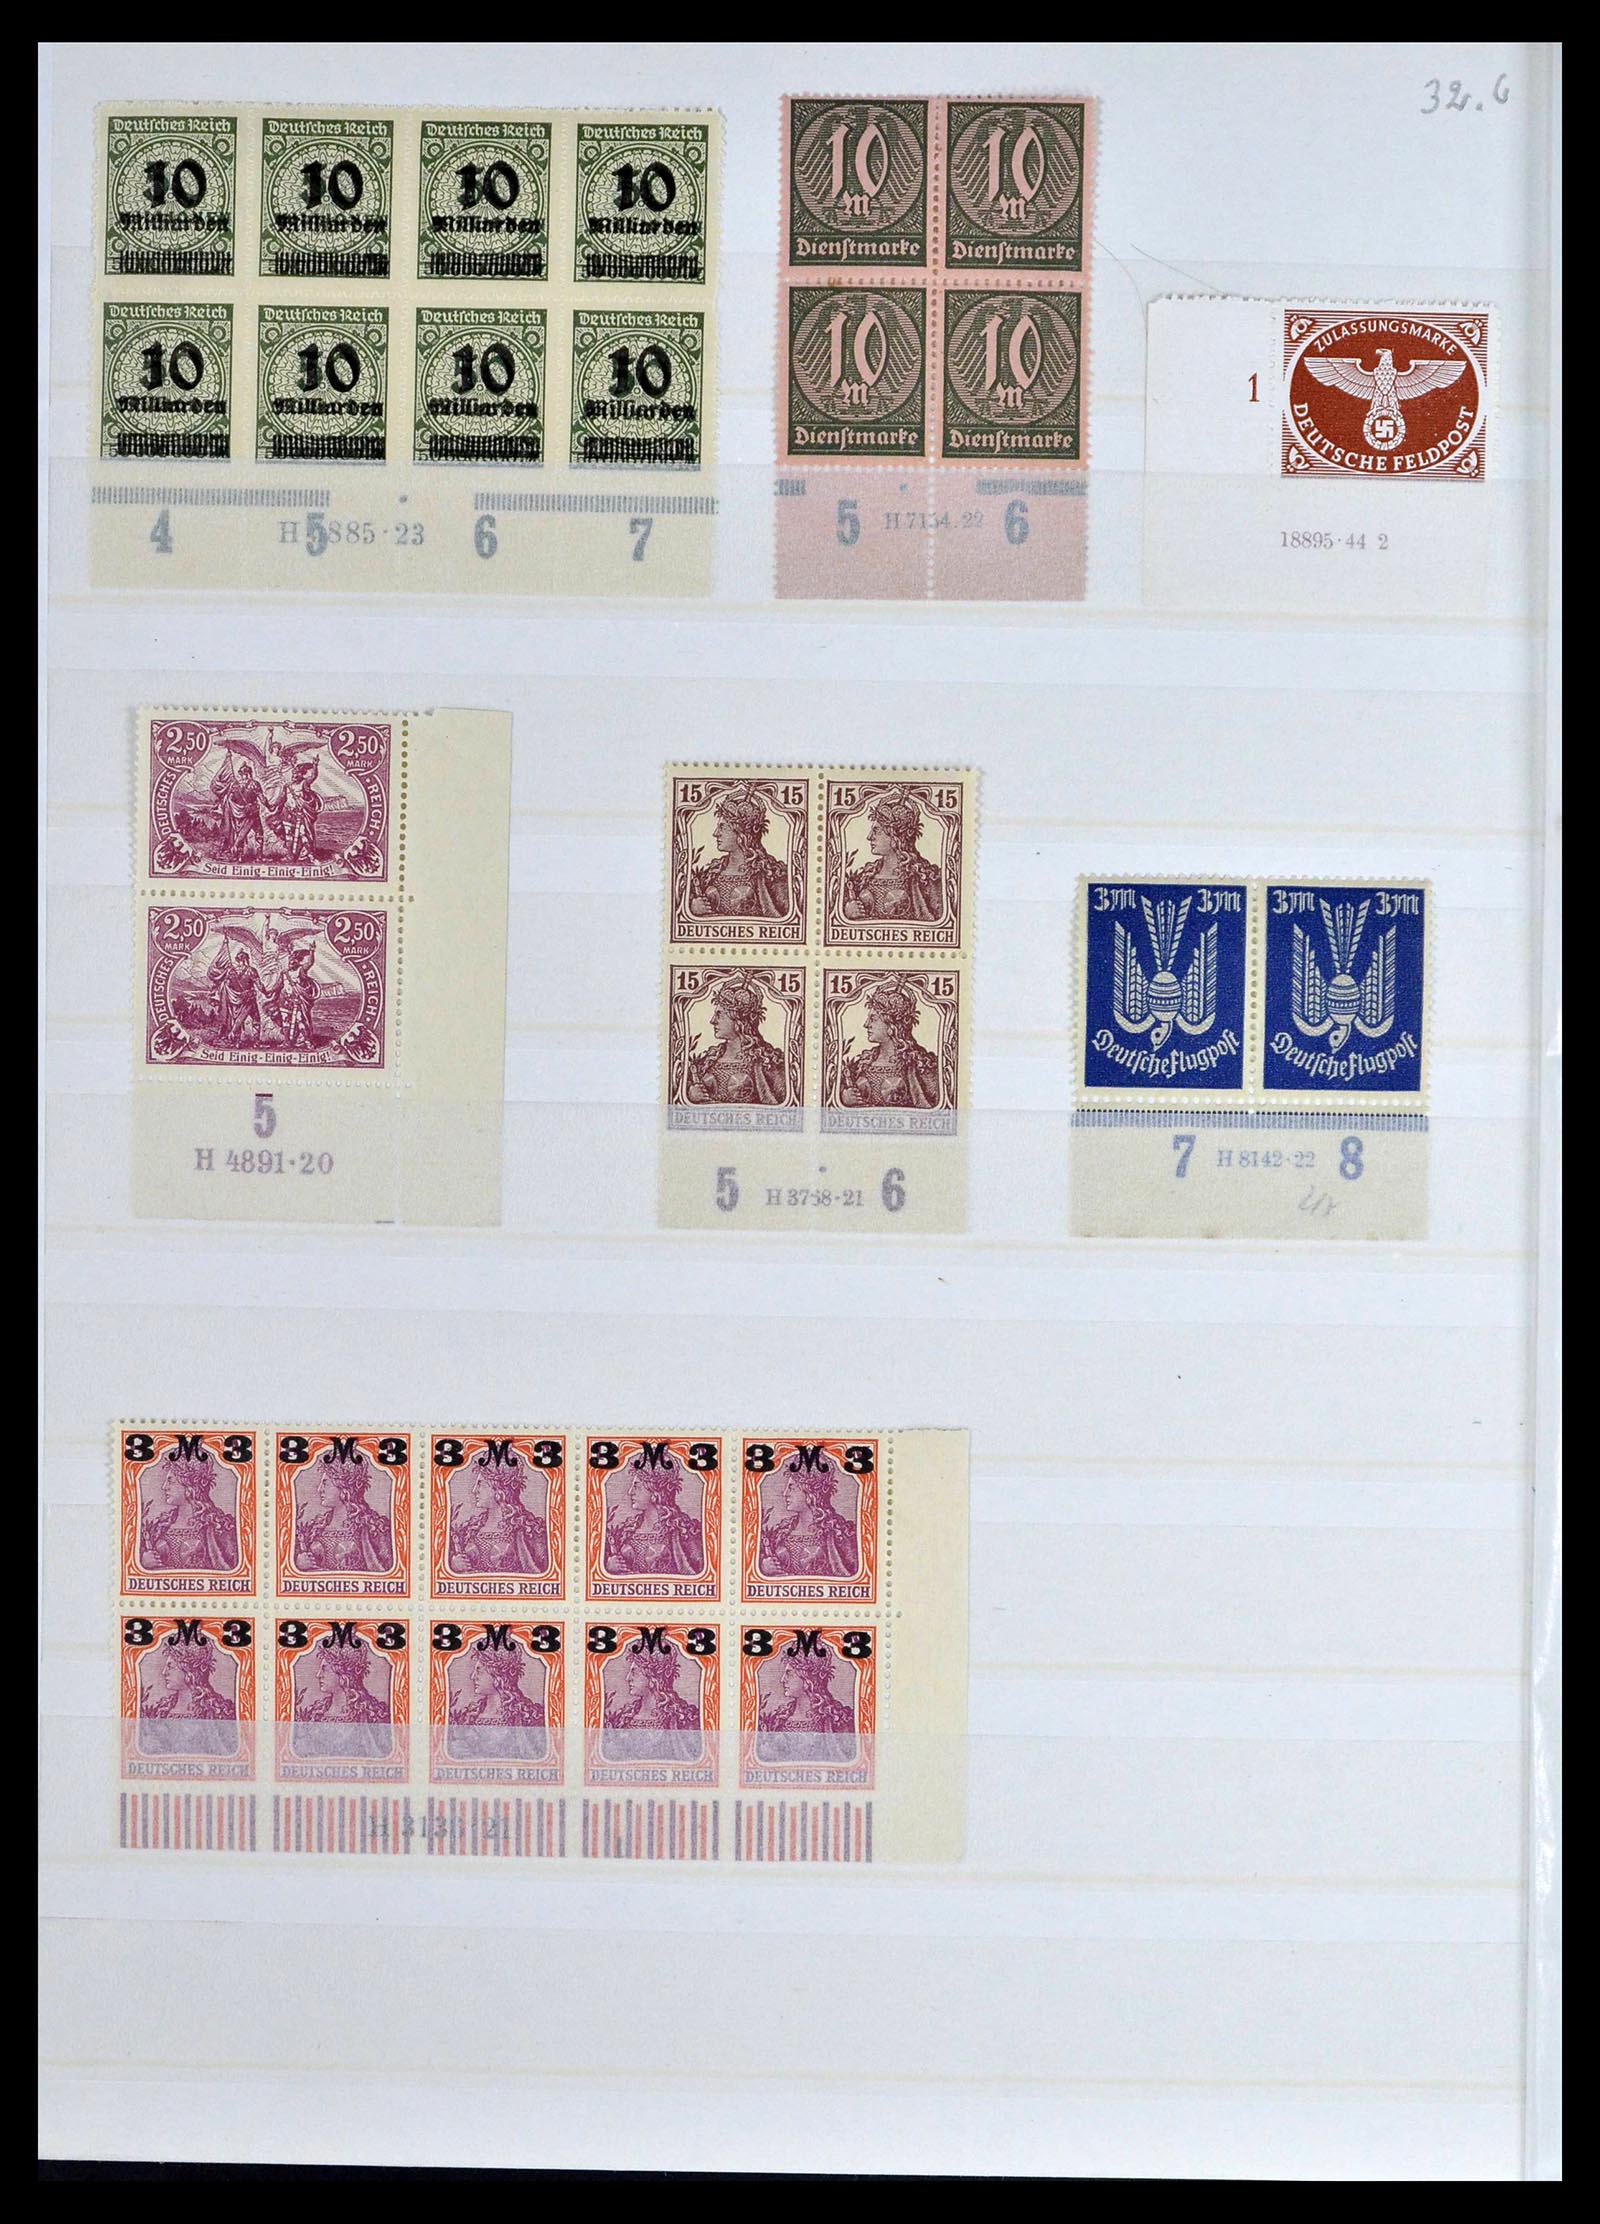 39254 0088 - Stamp collection 39254 German Reich MNH top margins.